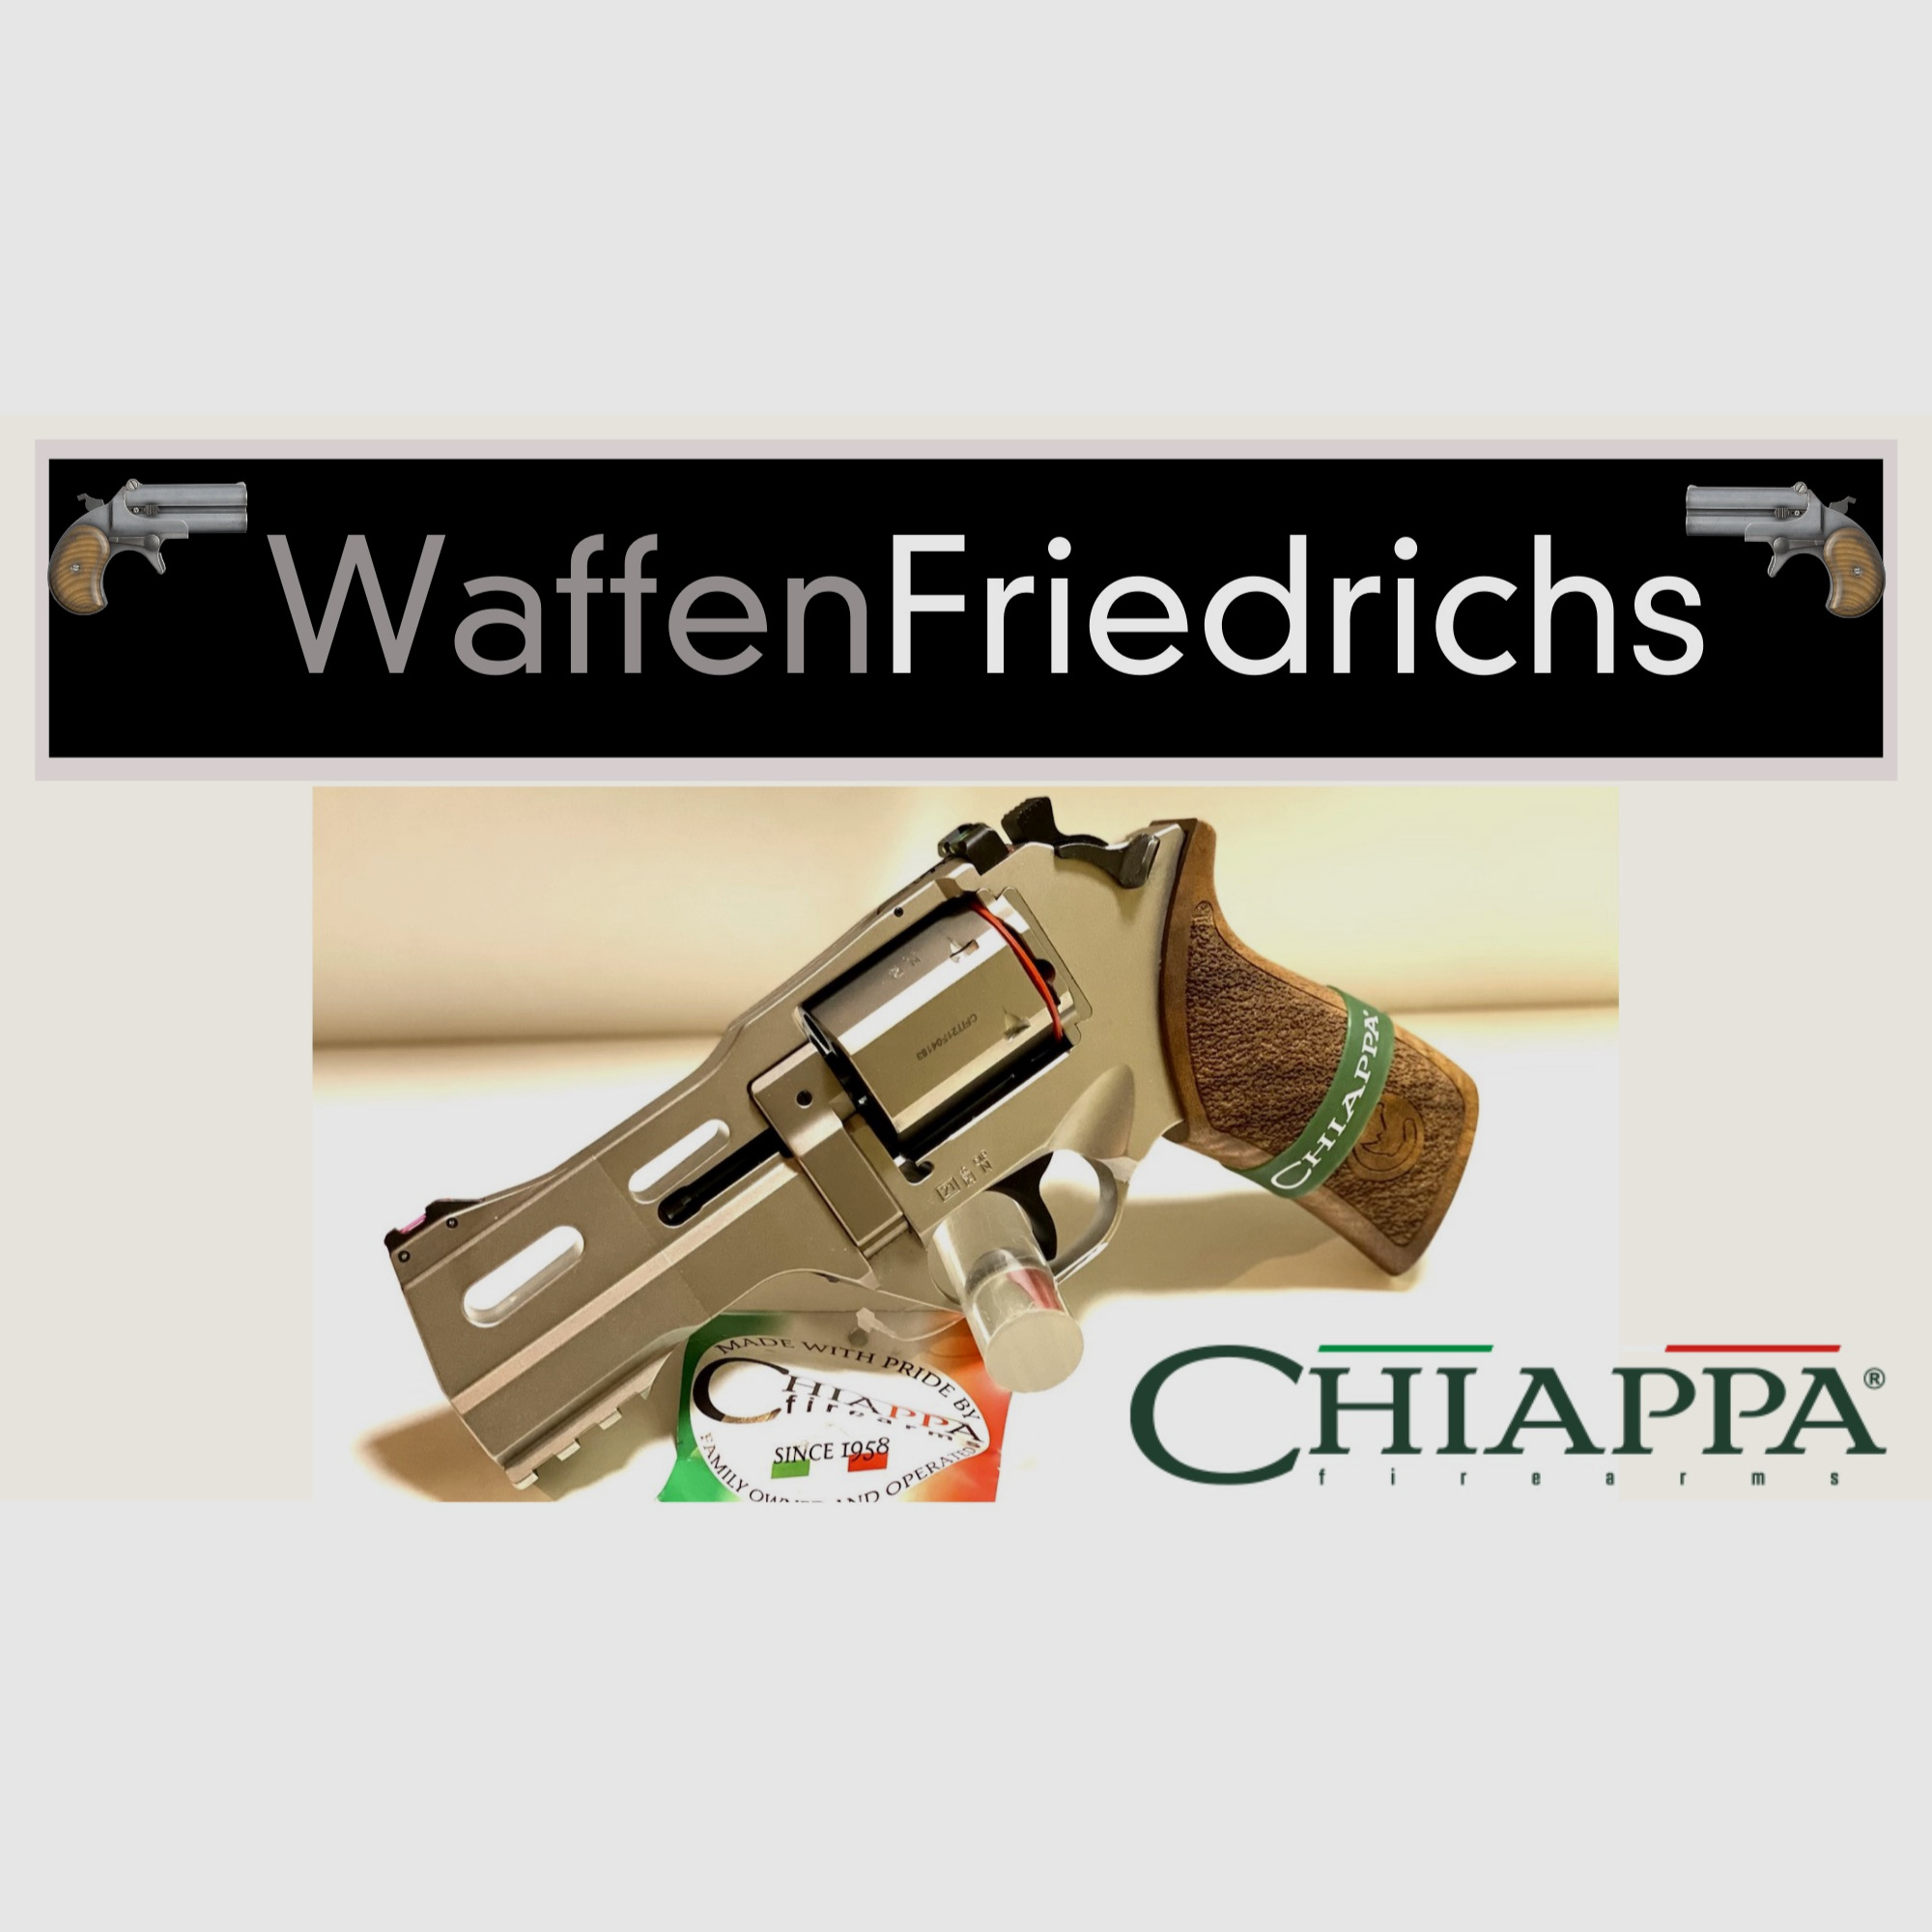 CHIAPPA RHINO 50DS Revolver NICKEL - WaffenFriedrichs